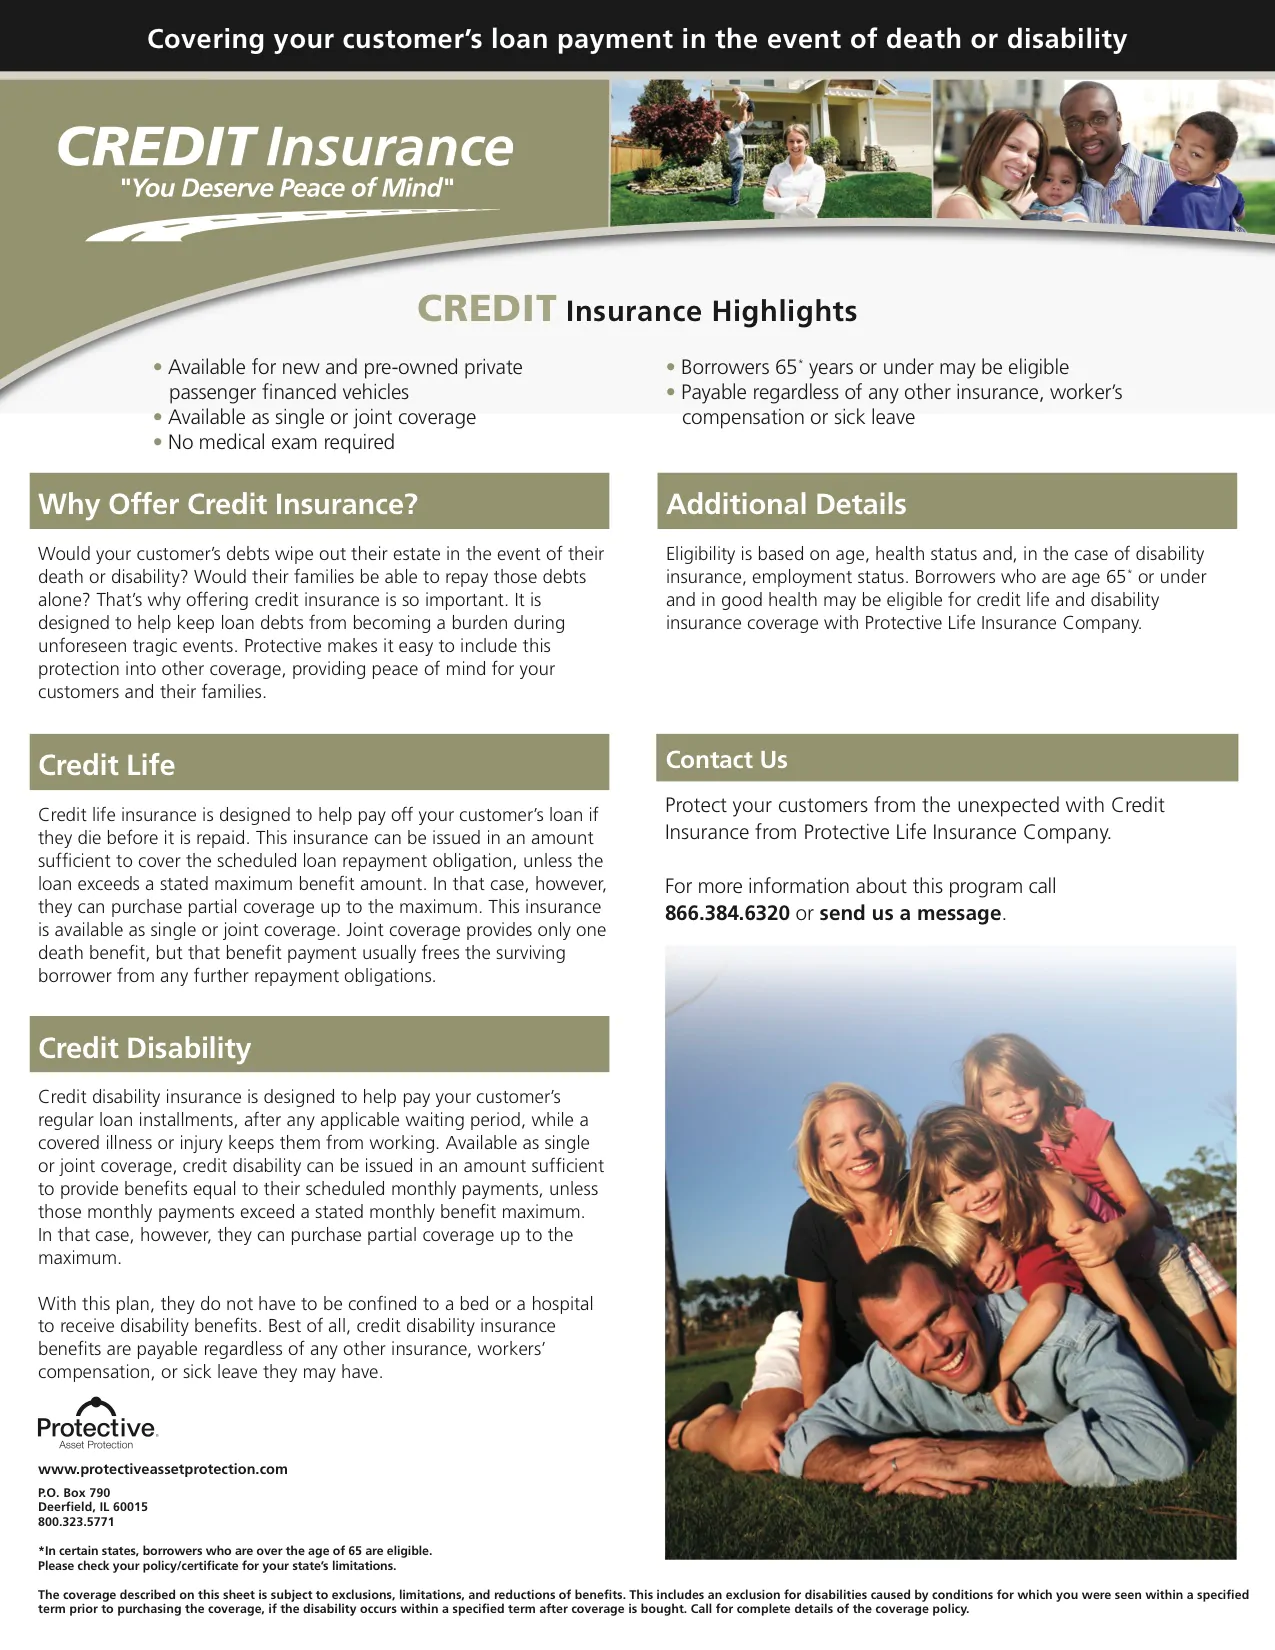 Credit Insurance Highlights